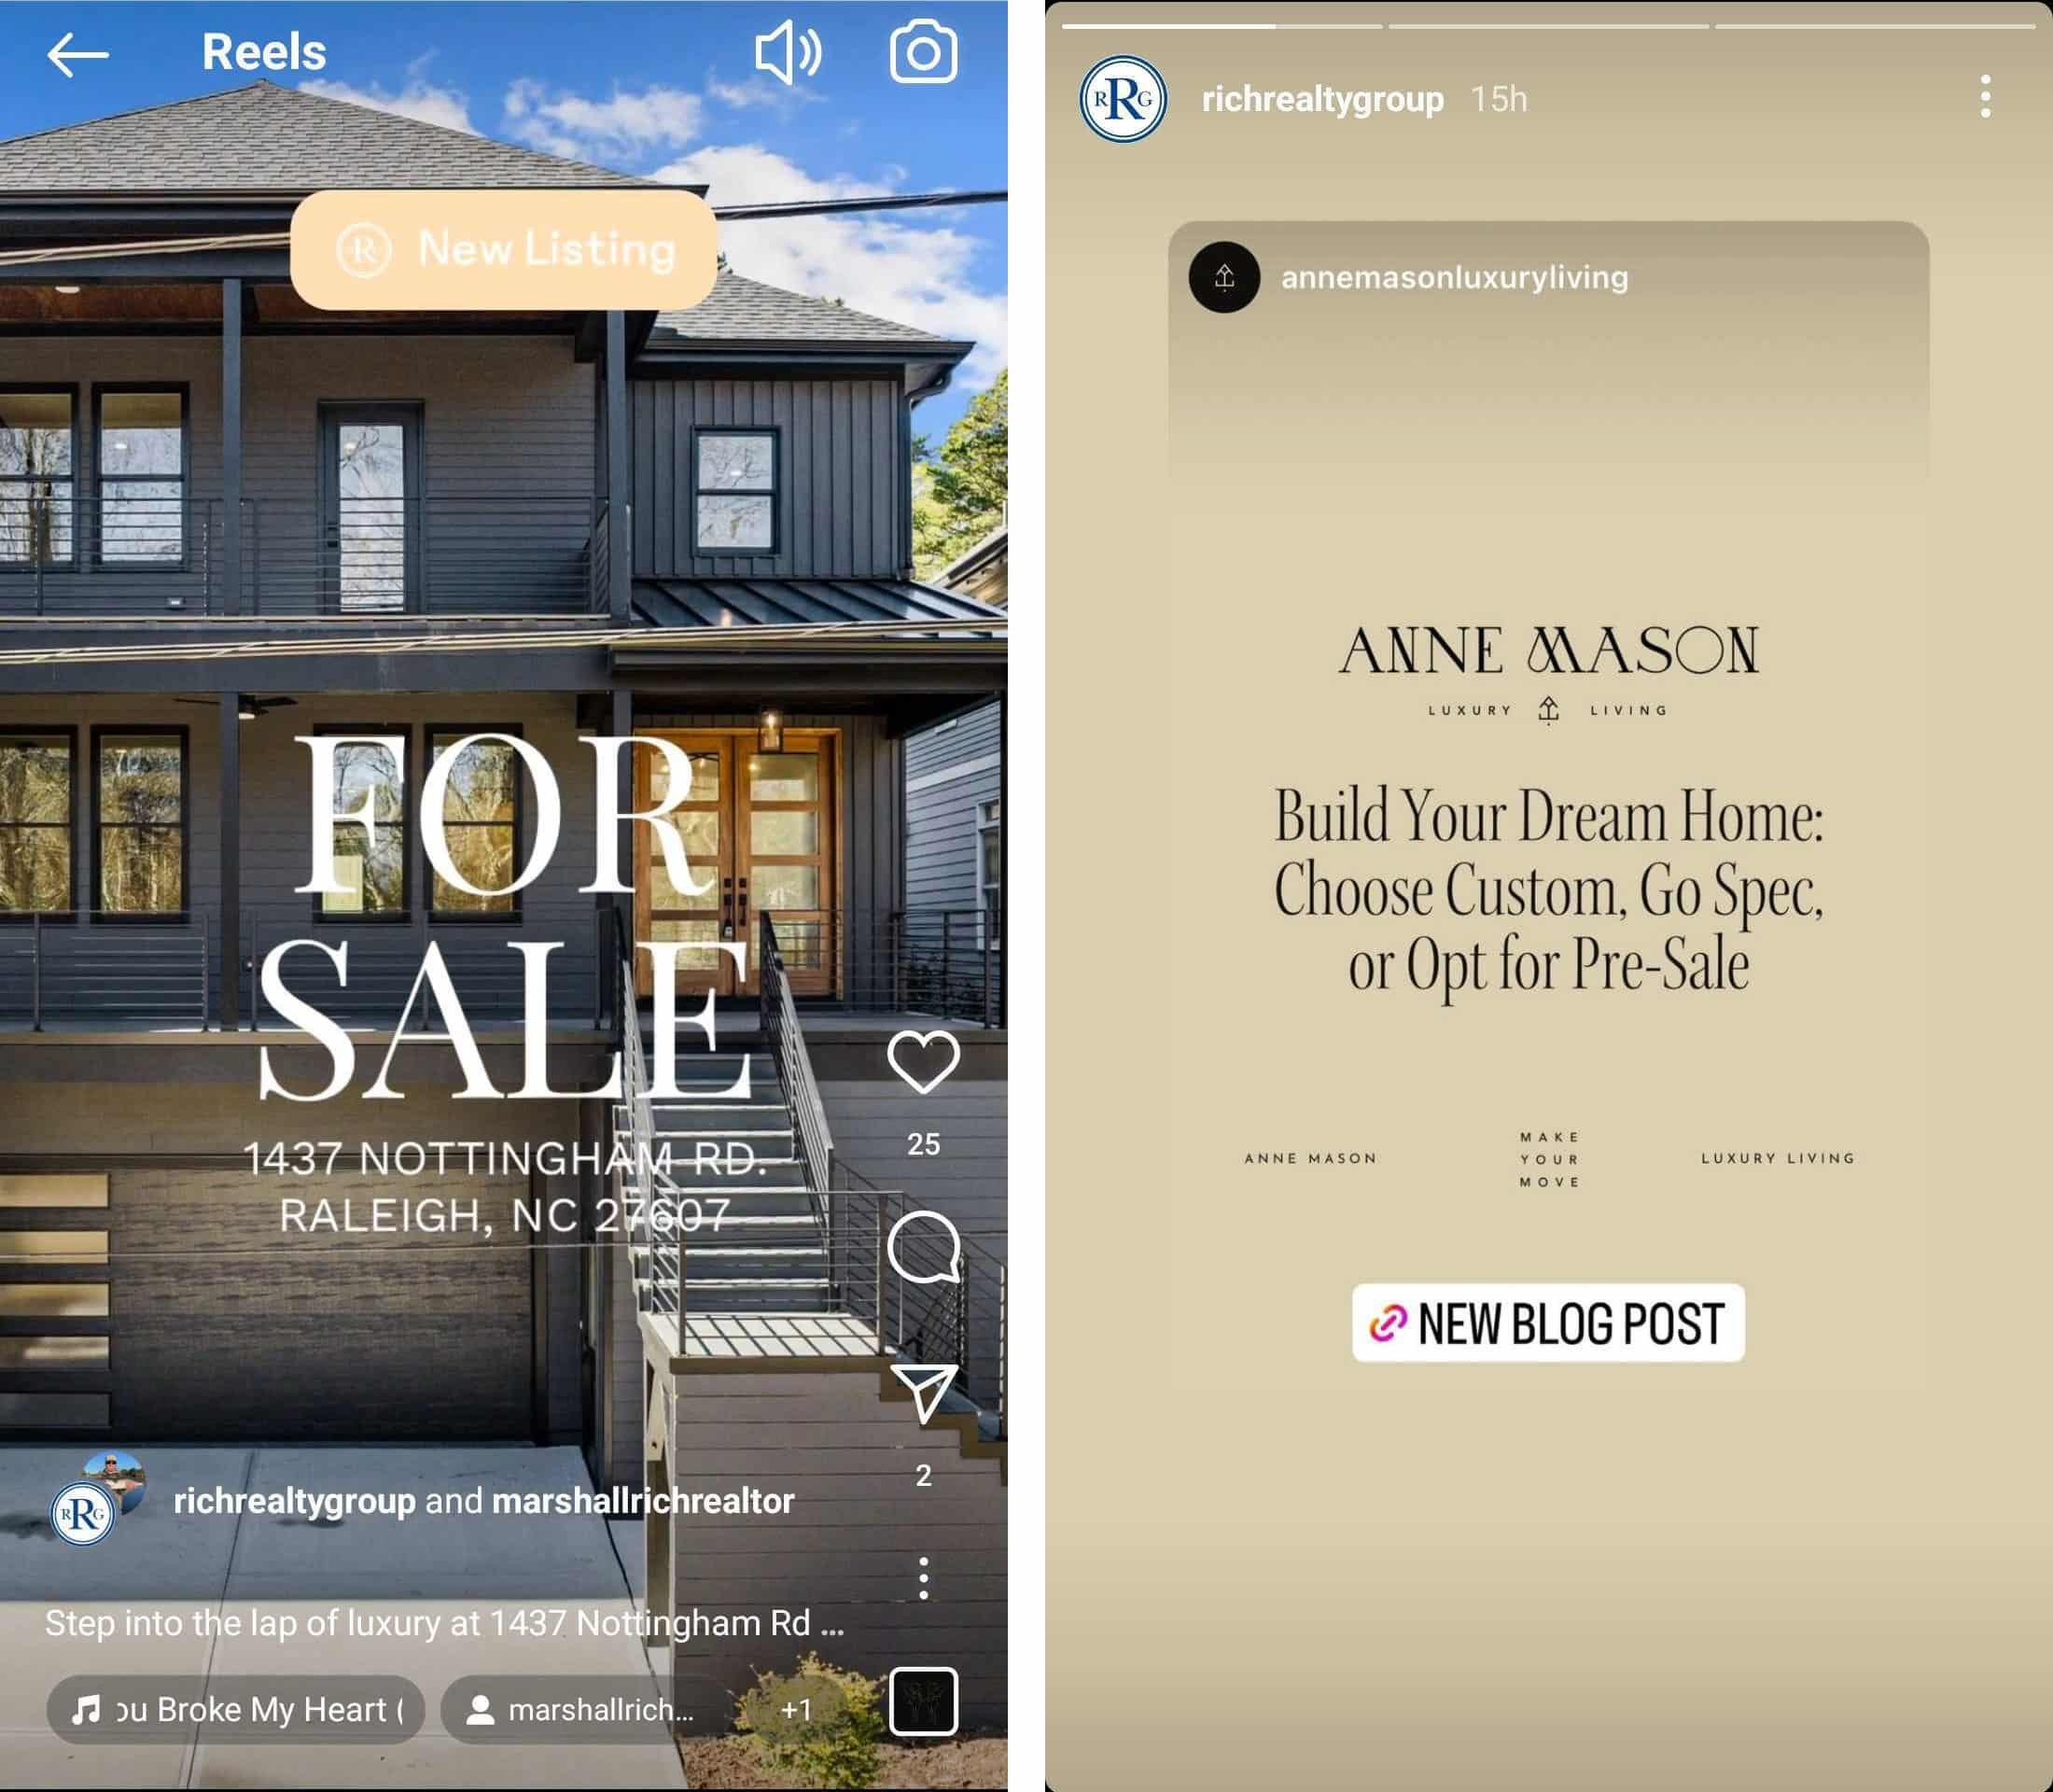 Instagram real estate example - richrealtygroup